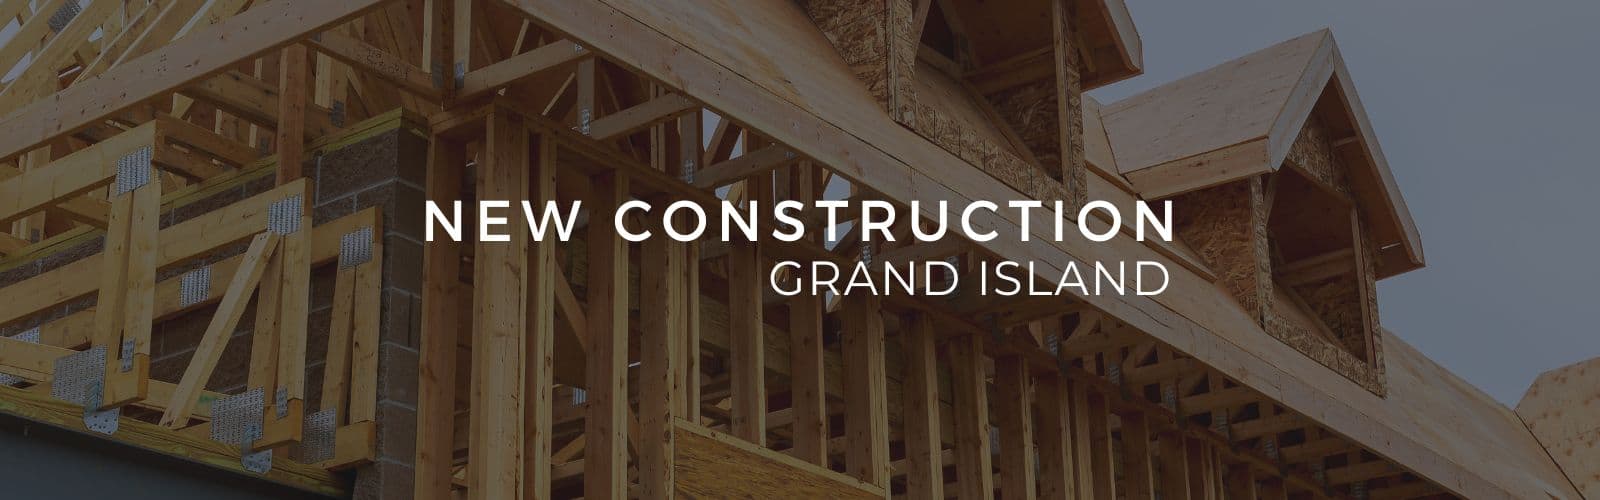 New Construction Grand Island